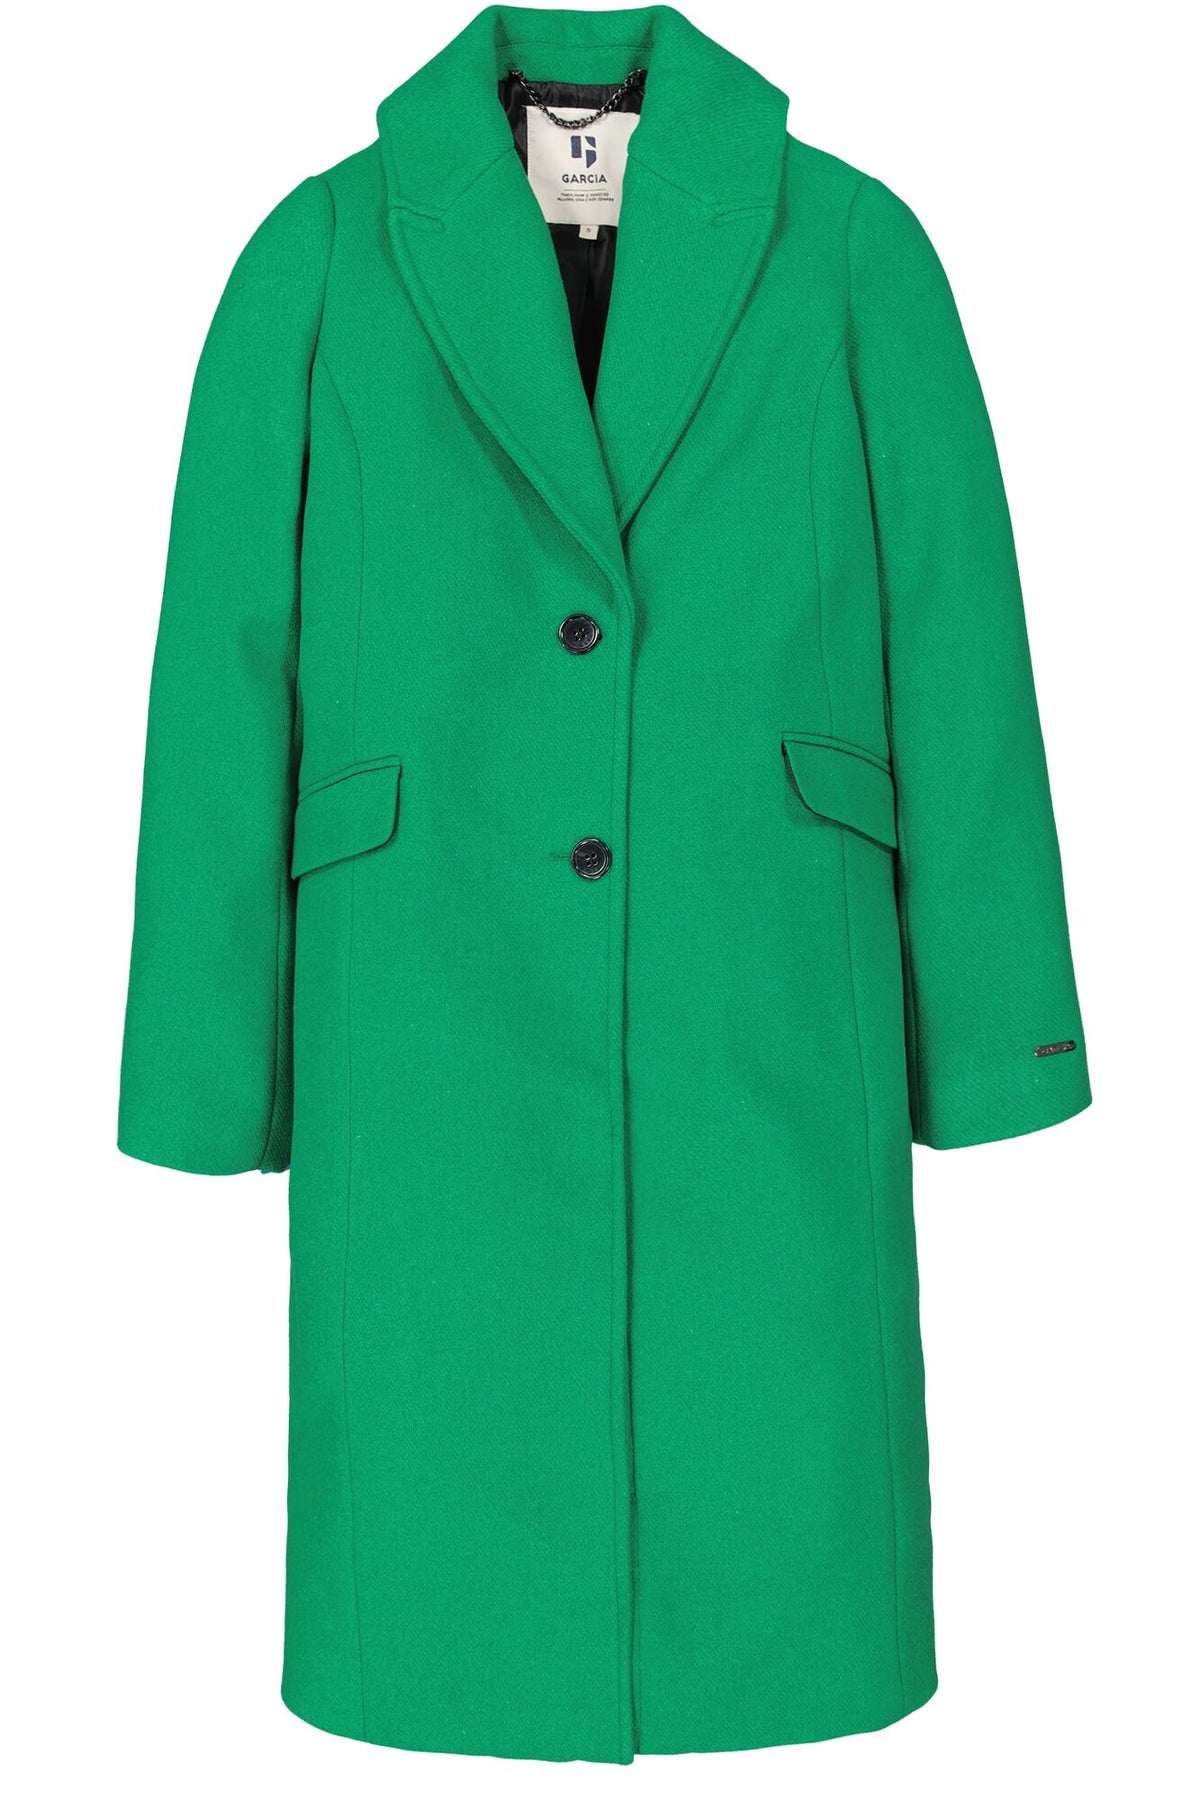 Garcia Flash Green Classic Coat, GJ300908